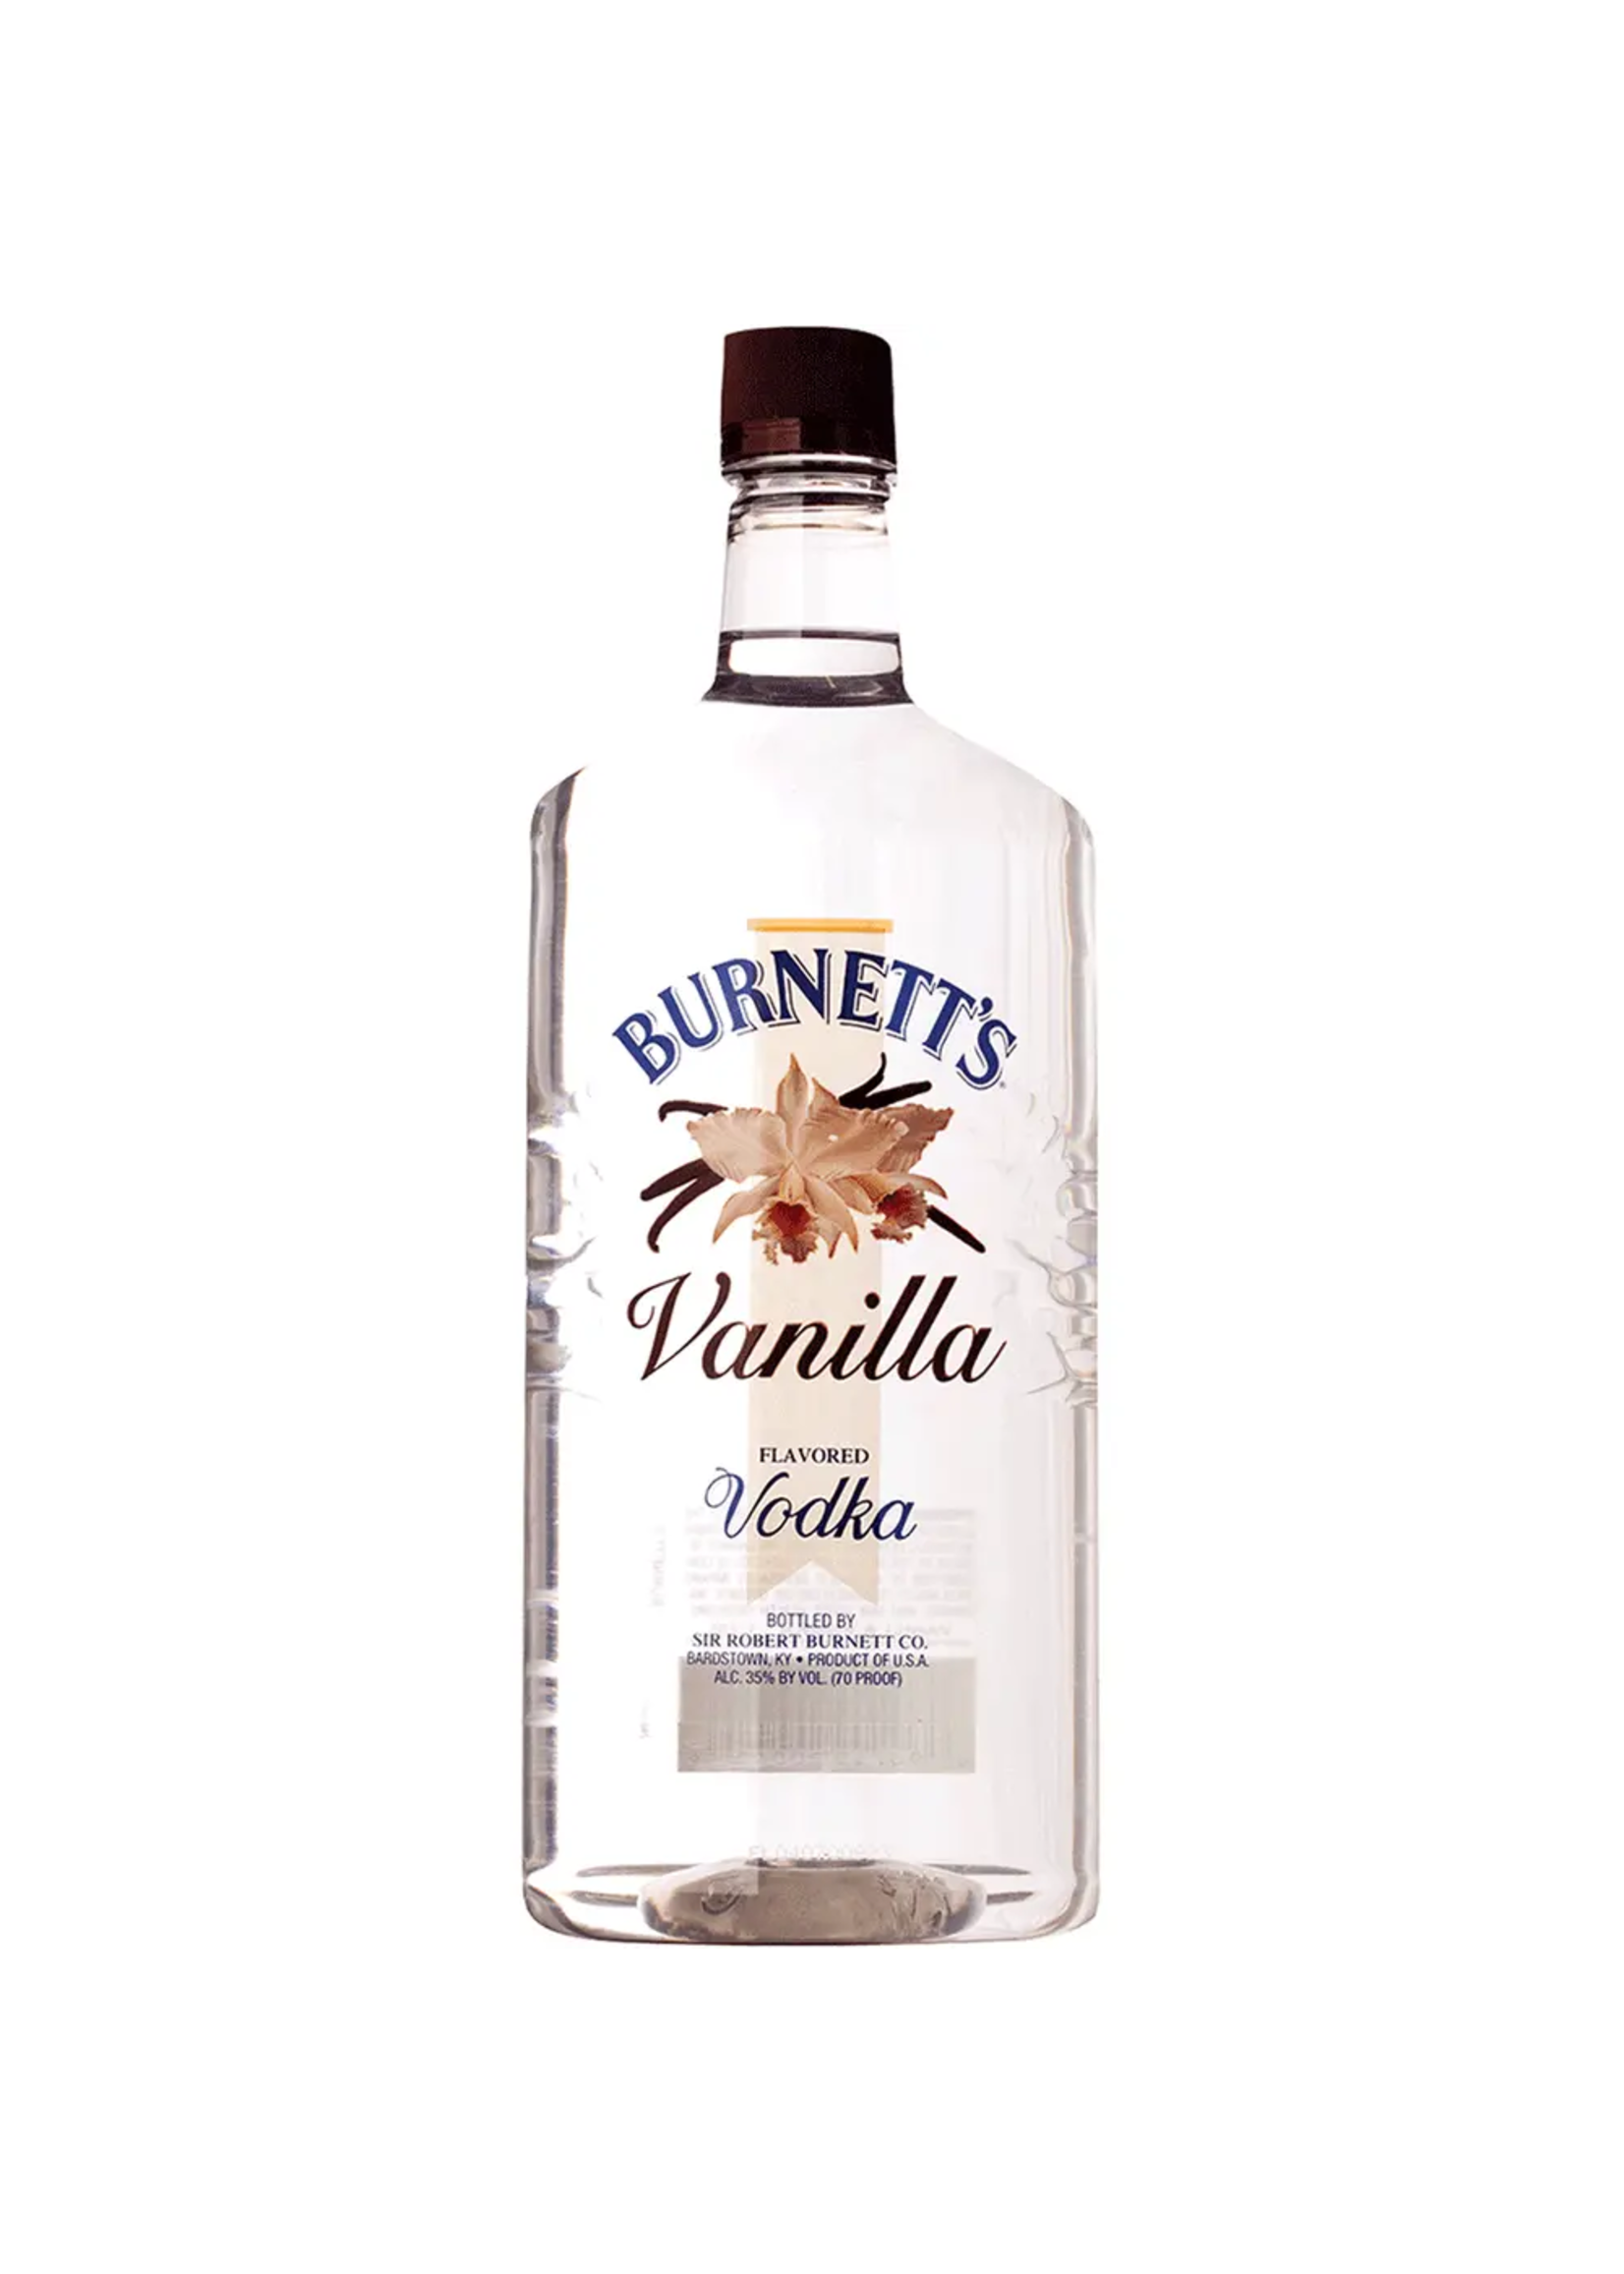 Burnetts Vanilla Flavored Vodka 70Proof 750ml